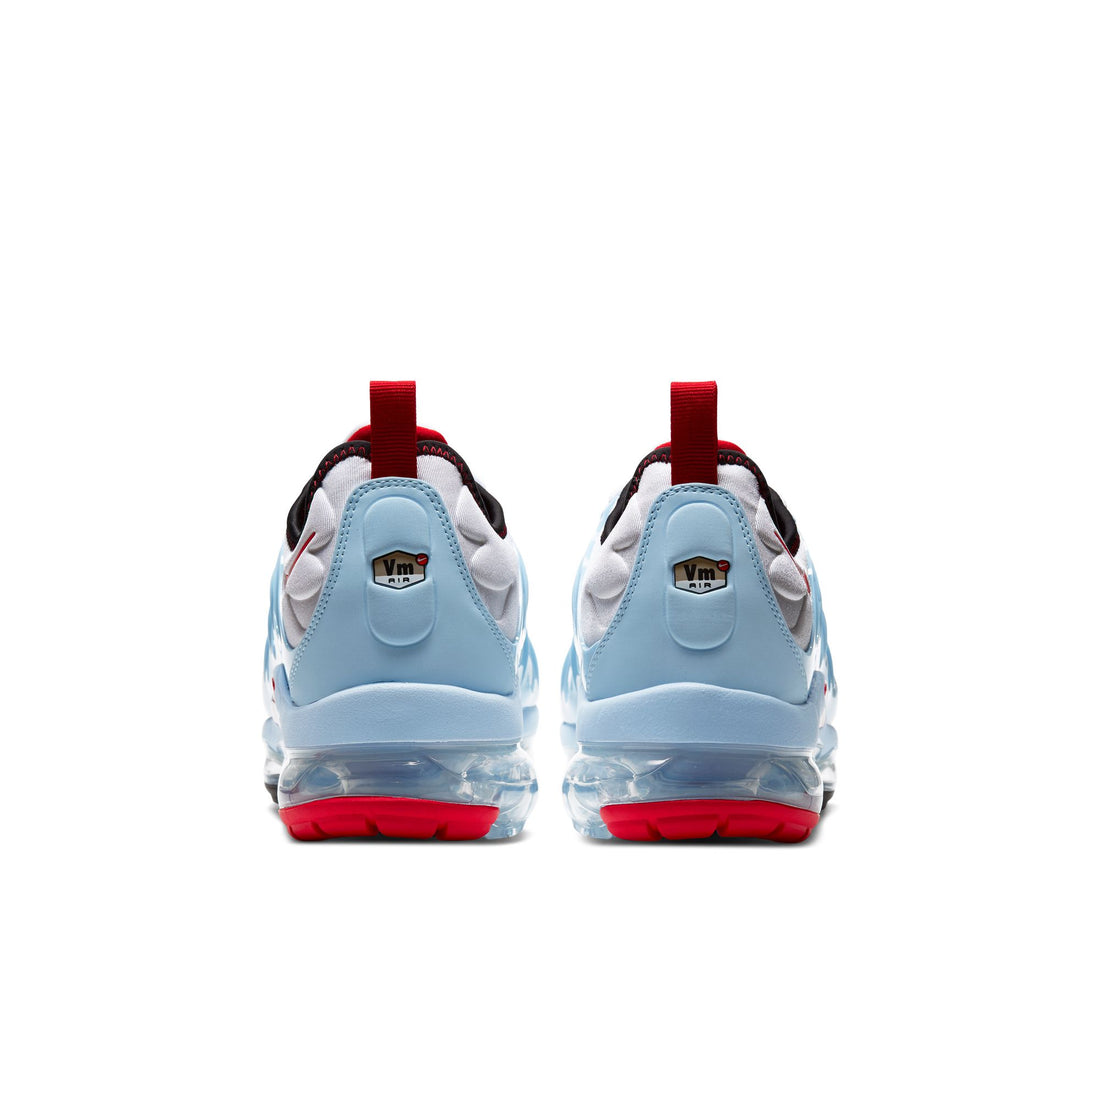 Nike Air Vapormax Plus (White/University Red/Black/Physic Blue)